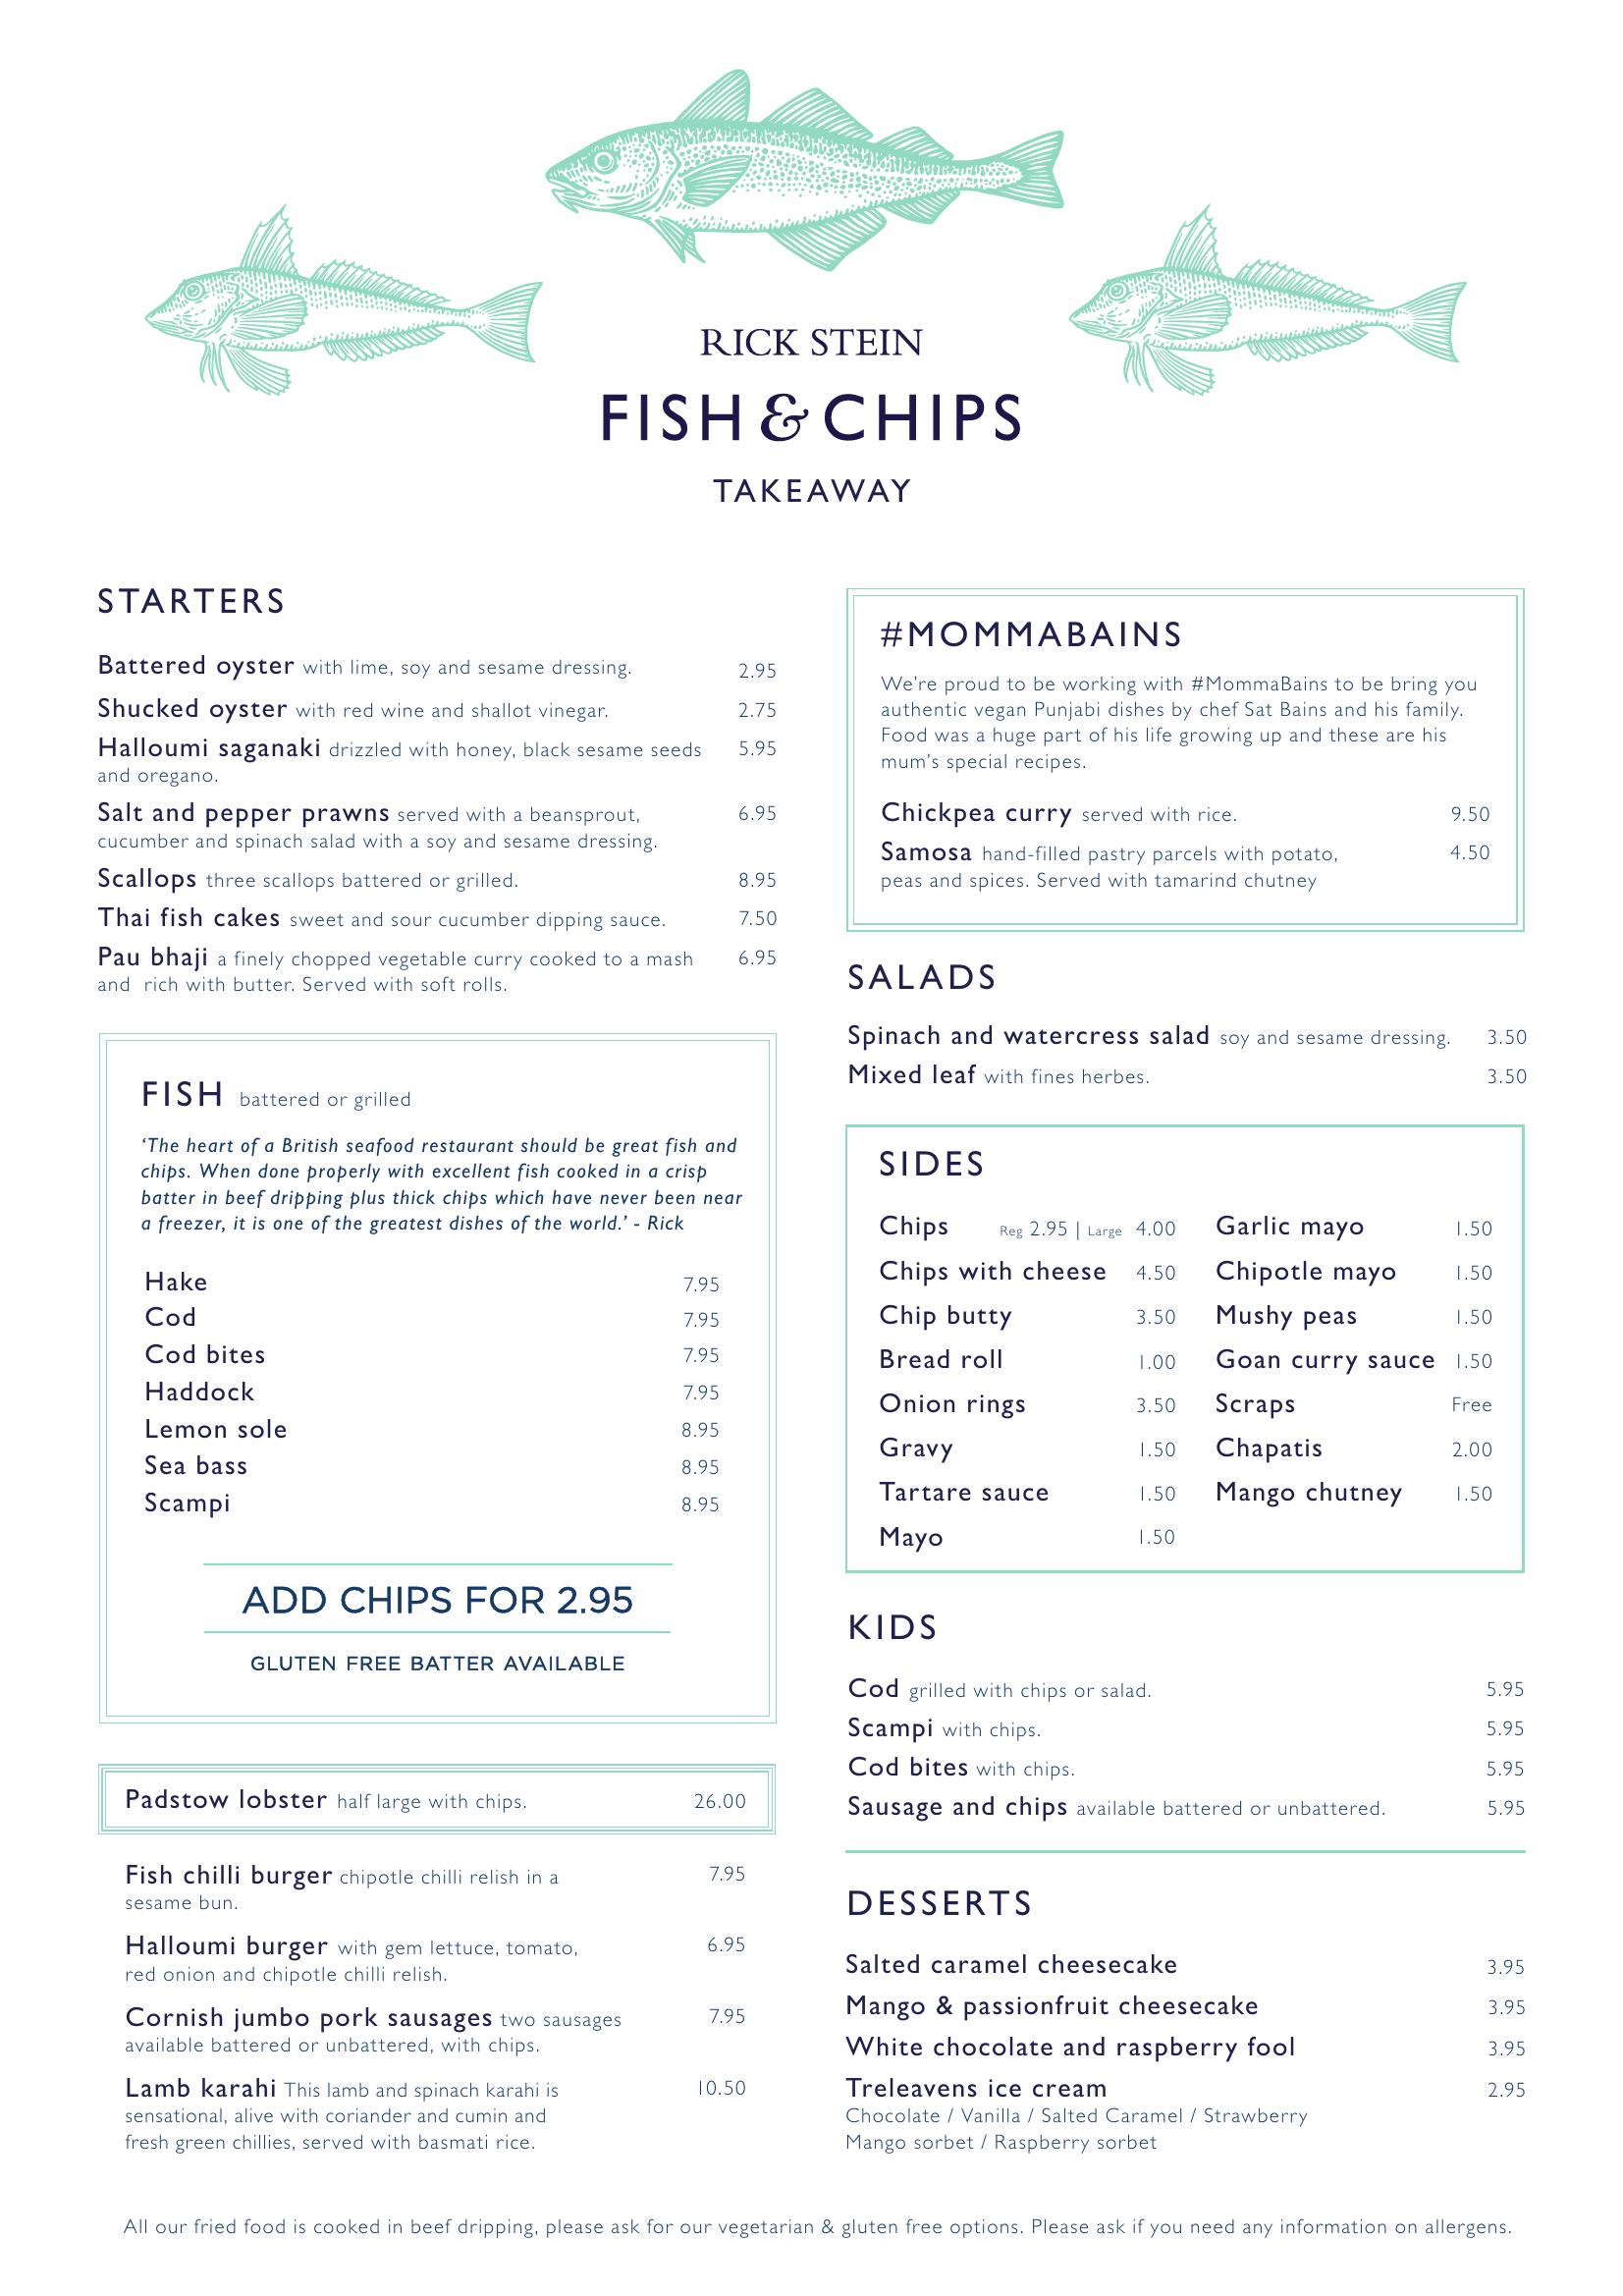 Stein’s Fish & Chips - main menu